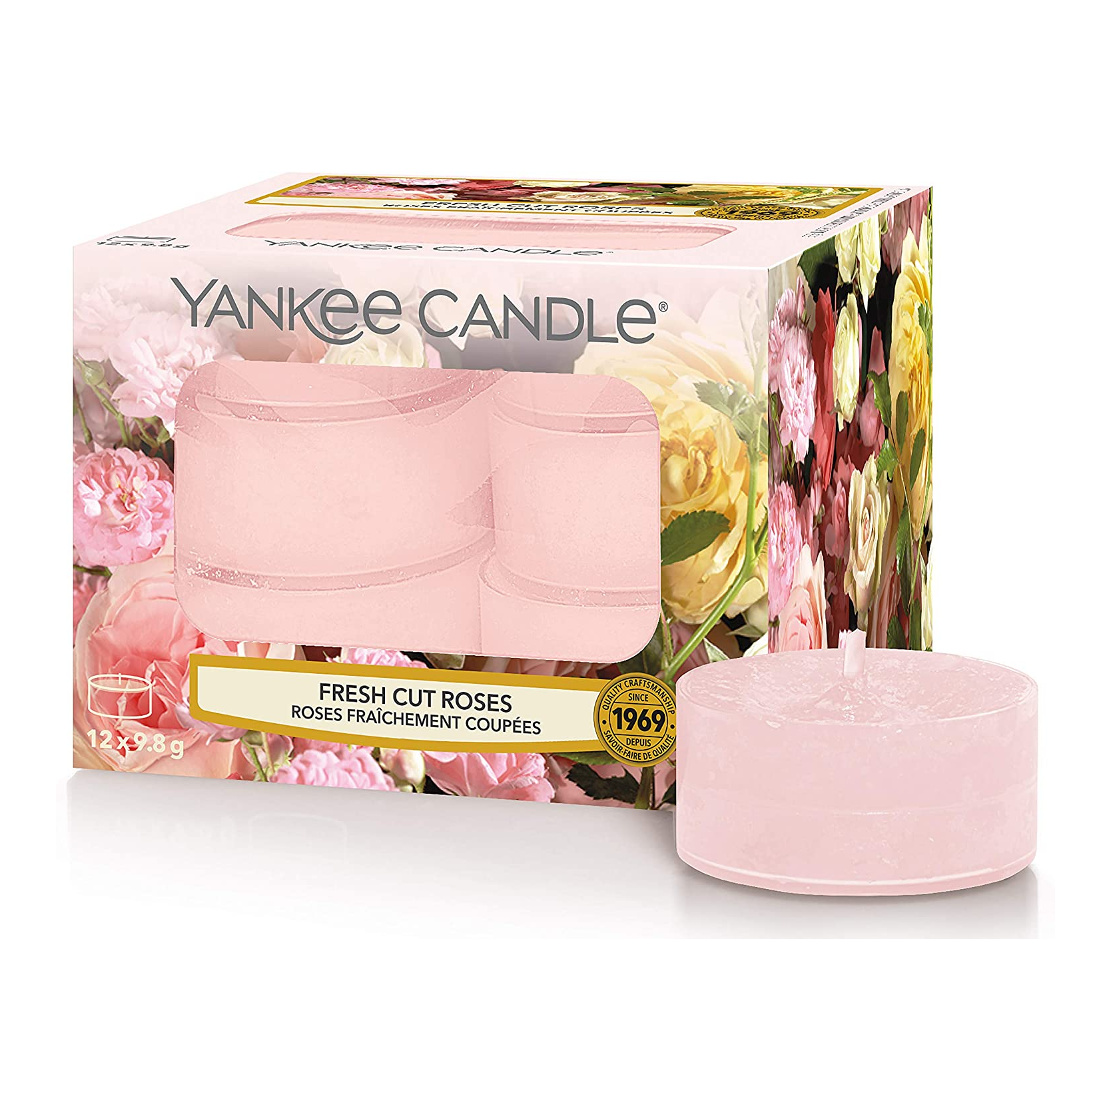 Yankee Candle Fresh Cut Roses Tealights